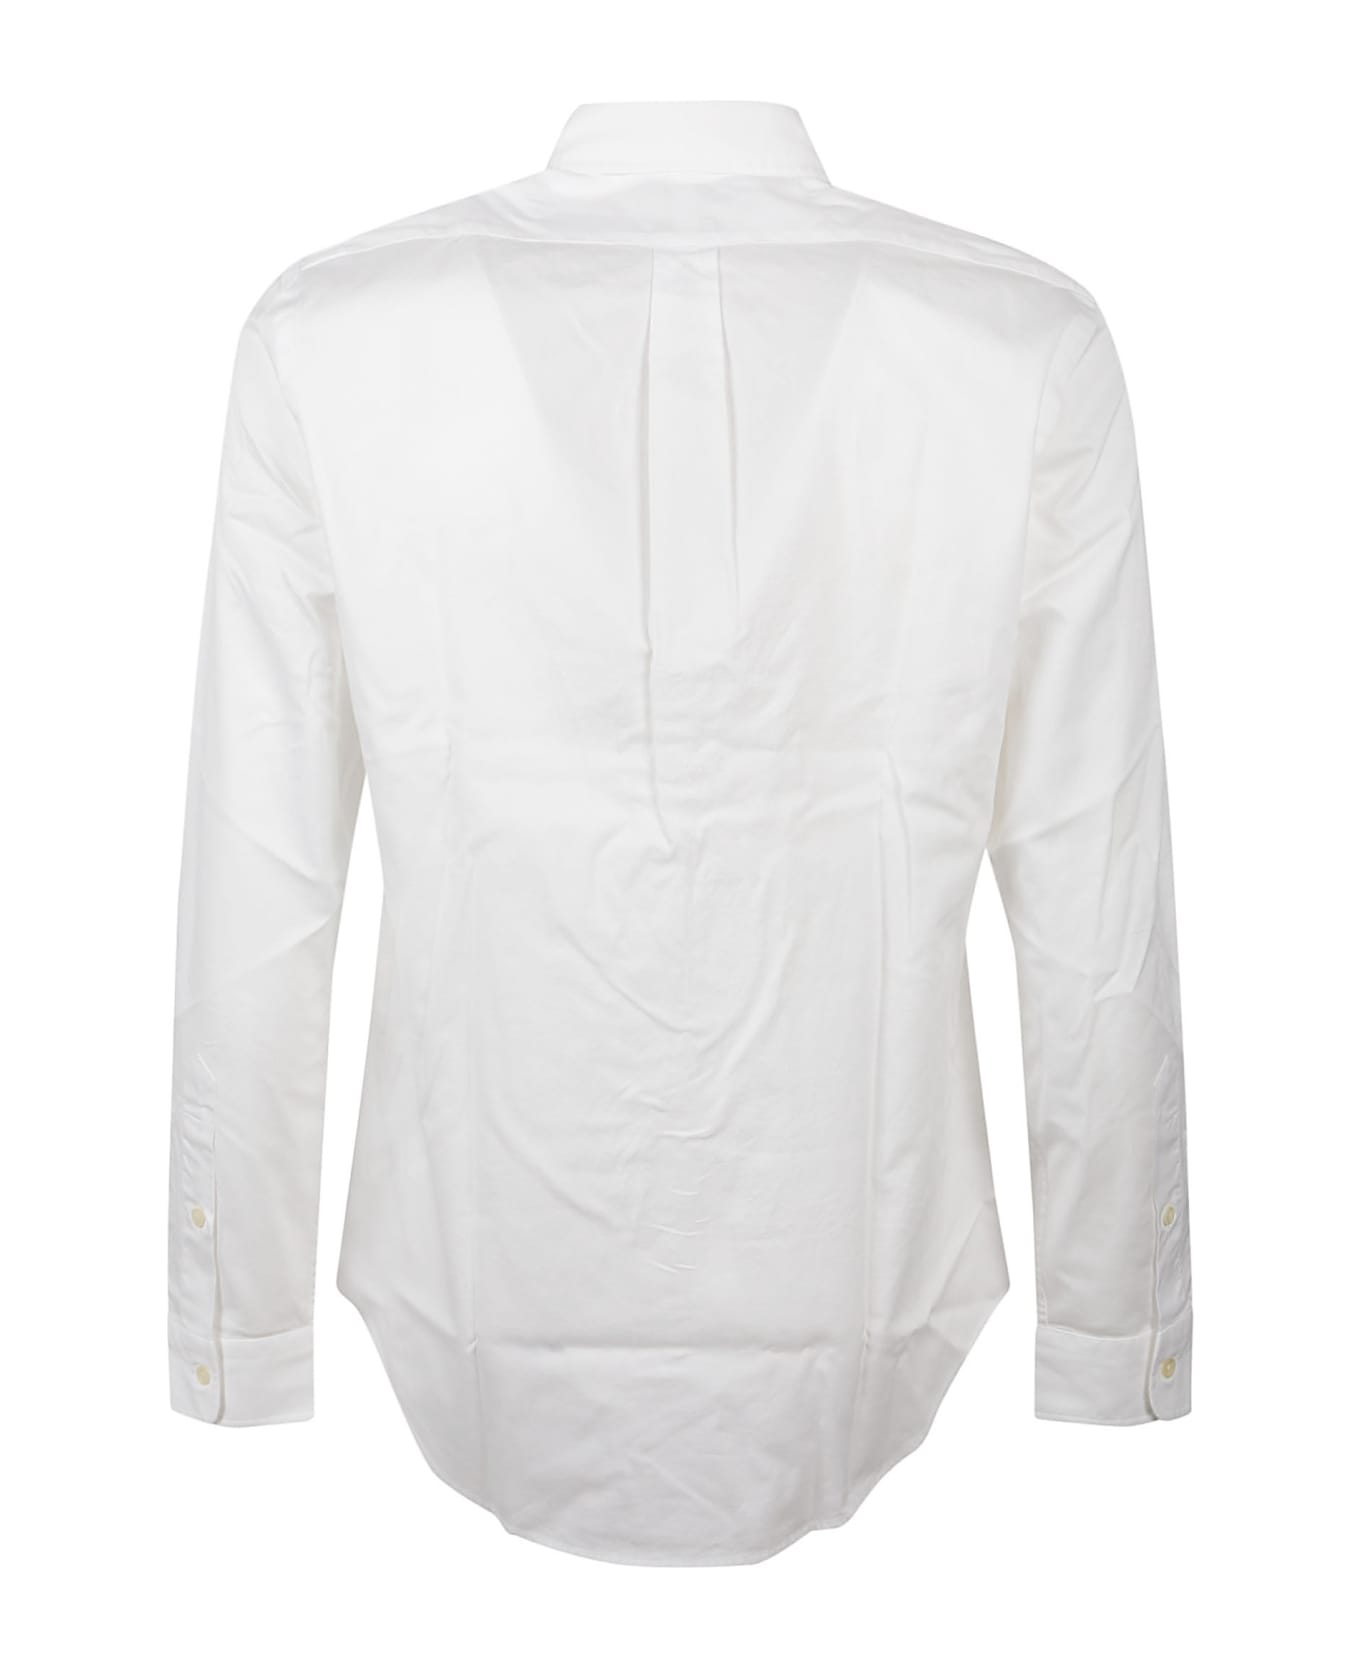 Polo Ralph Lauren Long Sleeve Sport Shirt - White